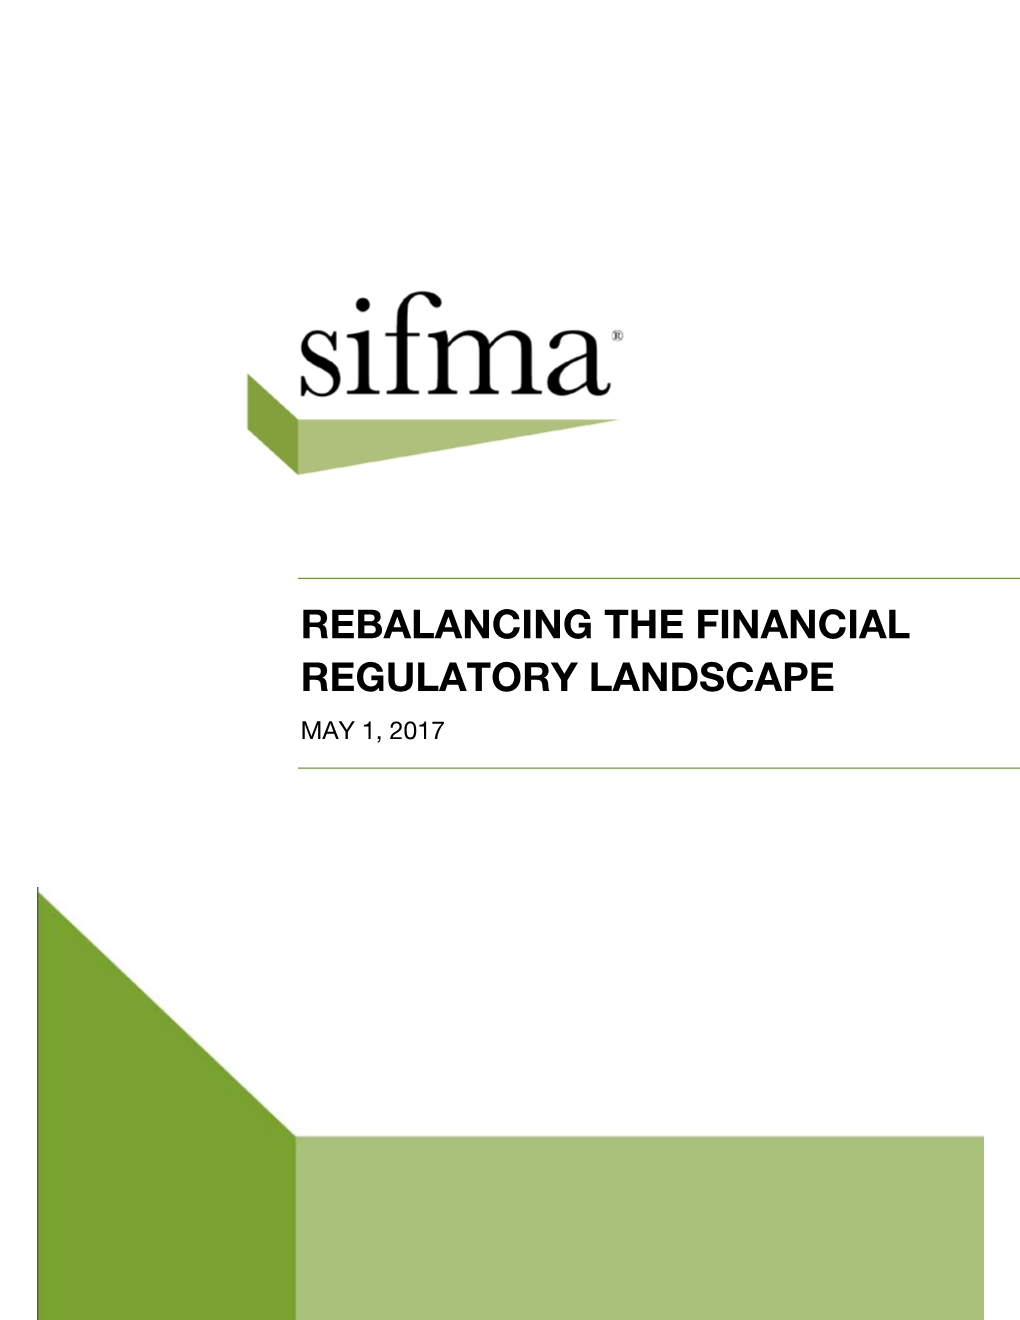 Rebalancing the Financial Regulatory Landscape May 1, 2017